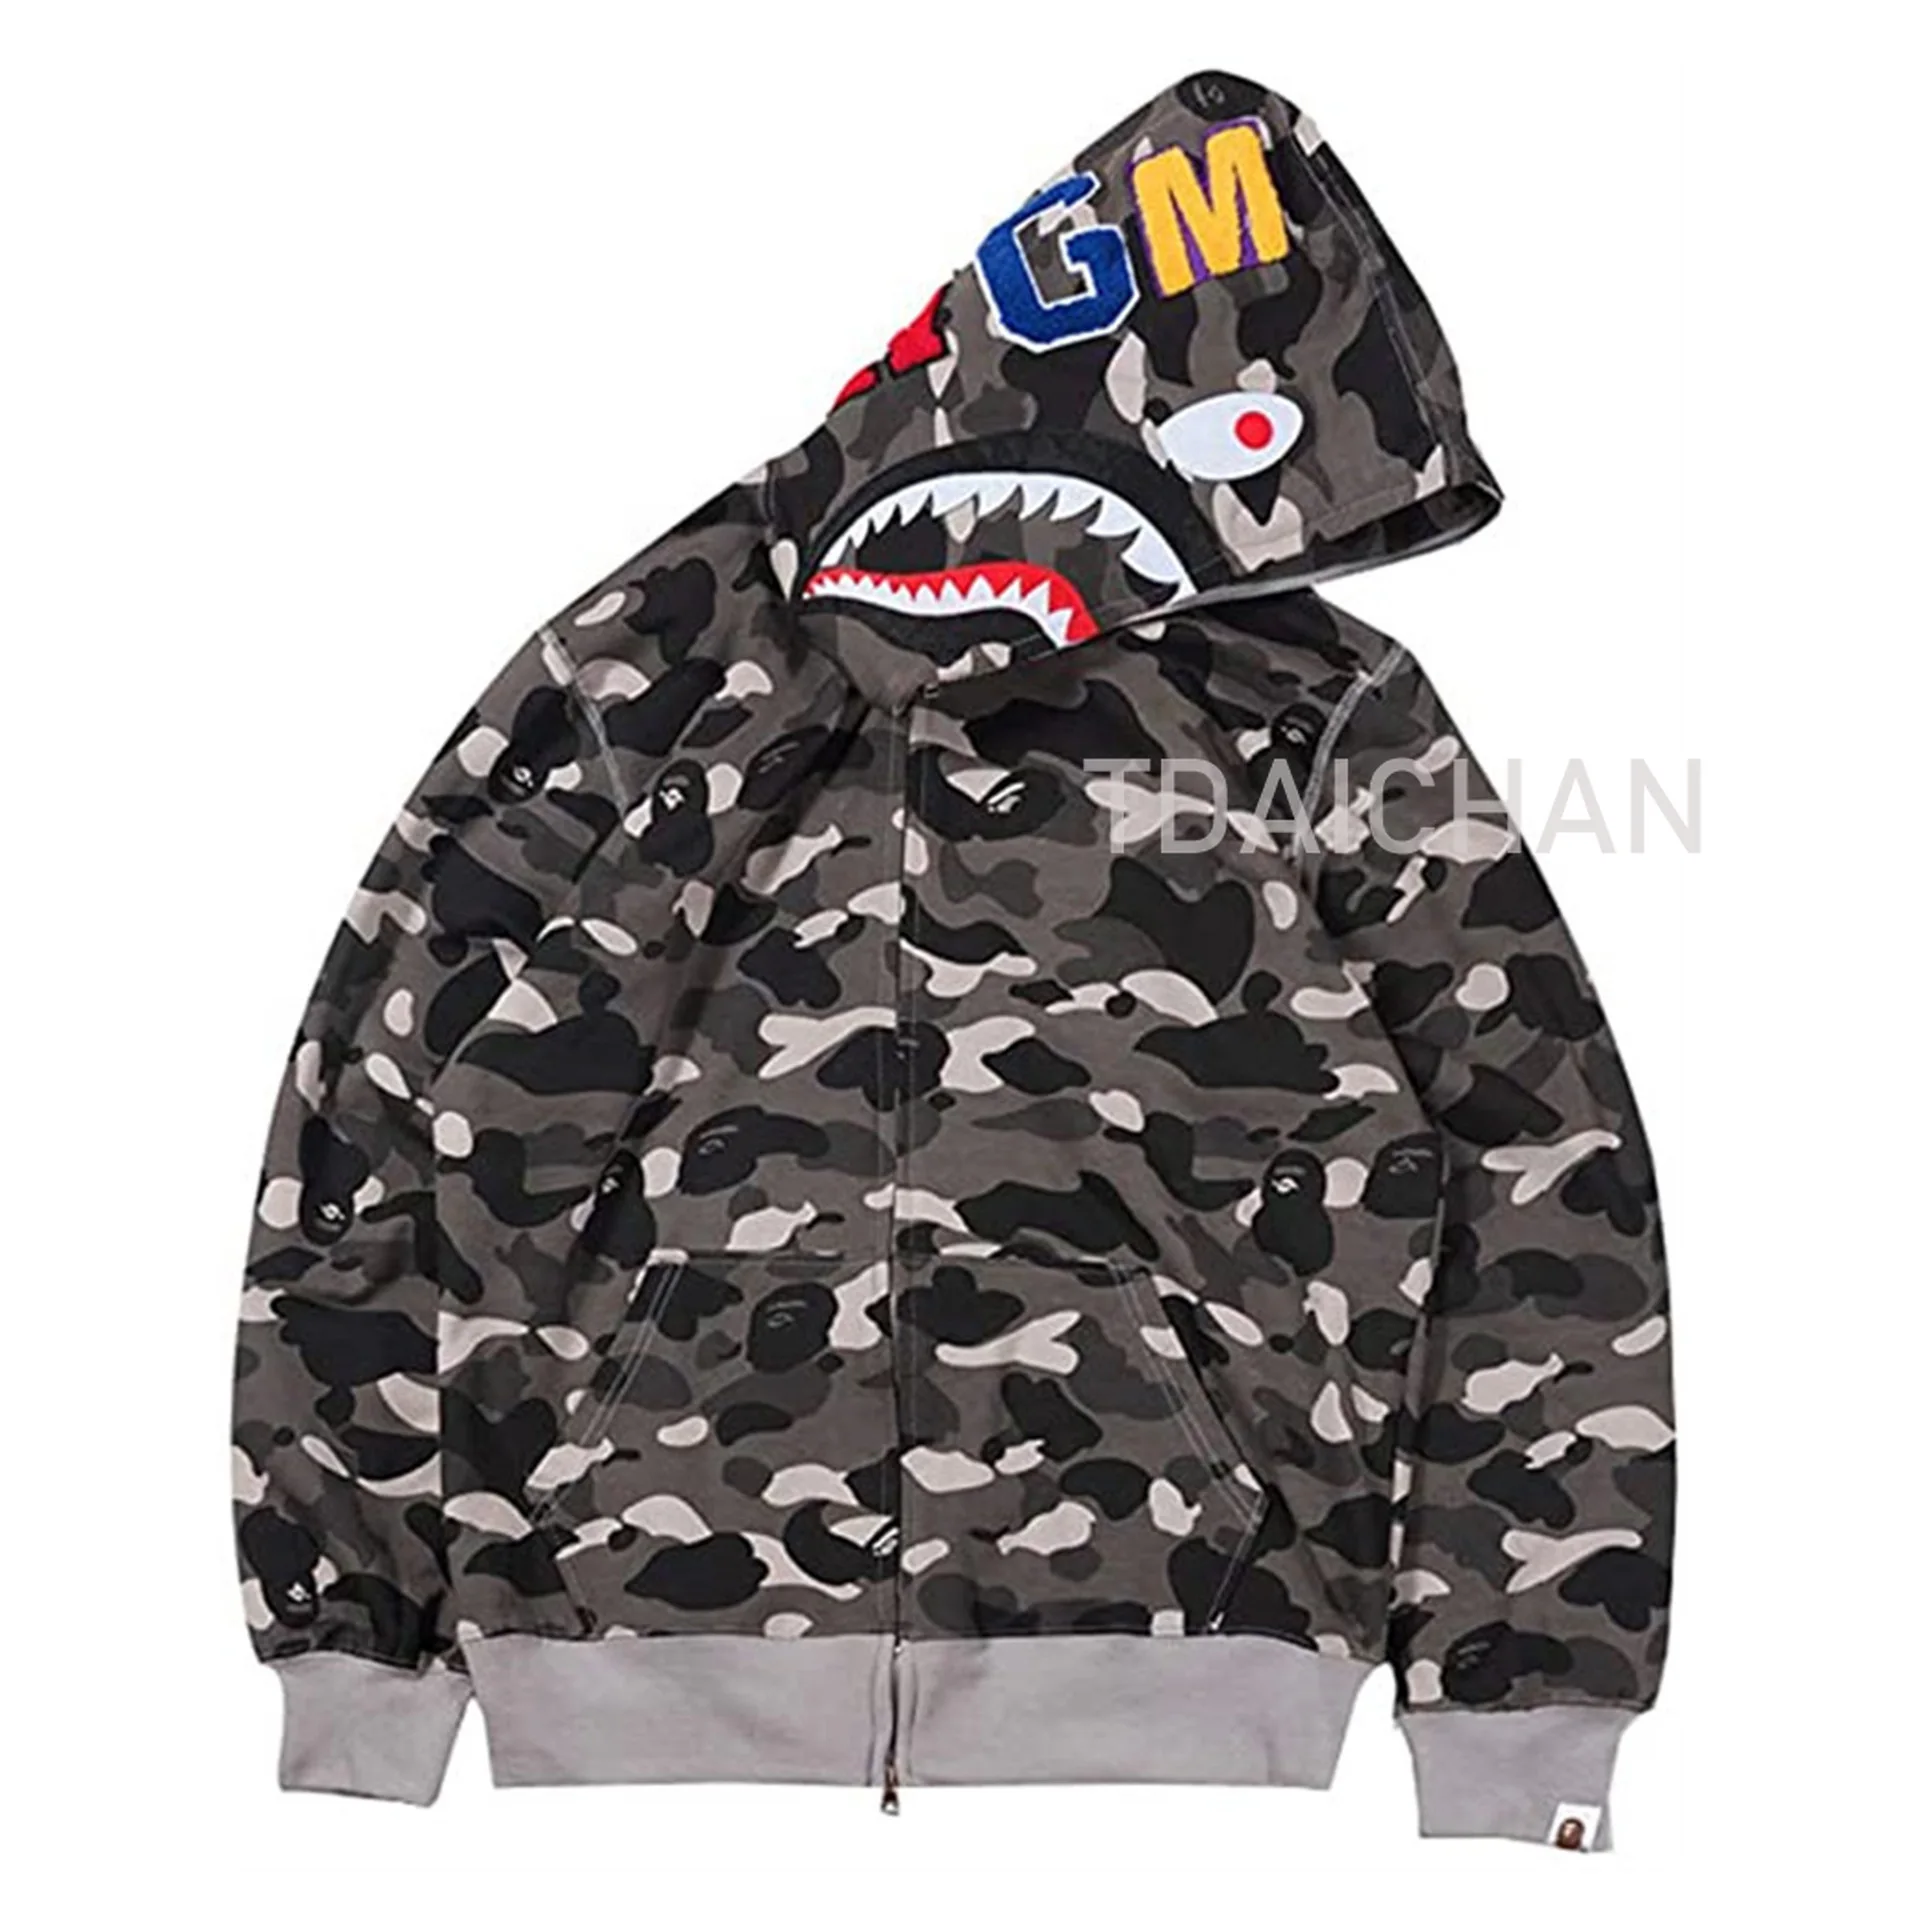 

2021 SHARKS Hoodies Winter Fashion Camouflage Couples Wear Hoody Casual Cardigan Hooded Shark Coat Streetwear Men Jacket